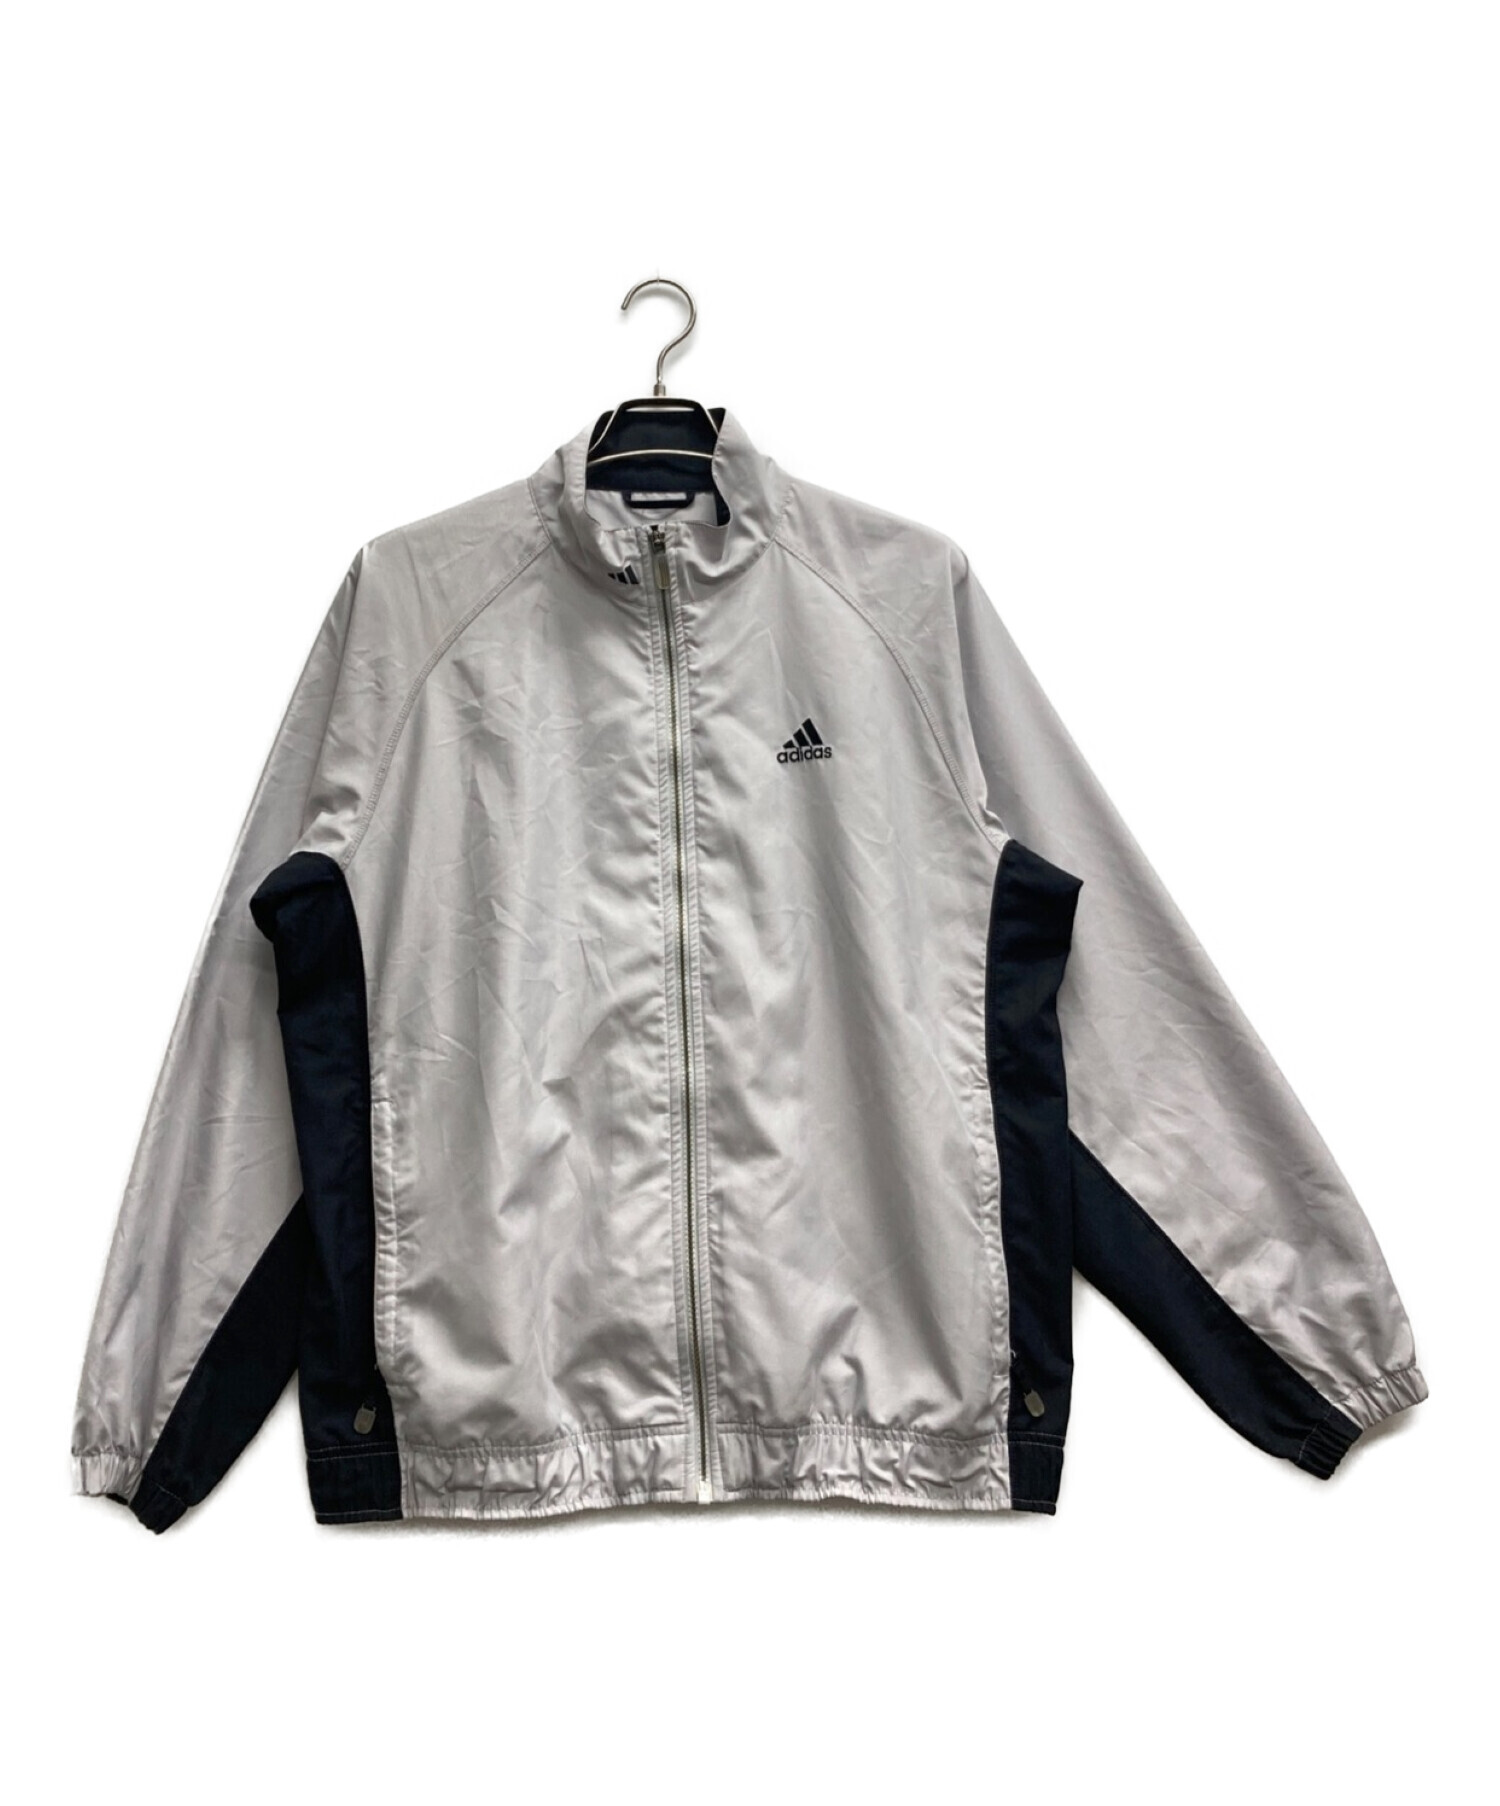 adidas track jacket 90s size L グレー